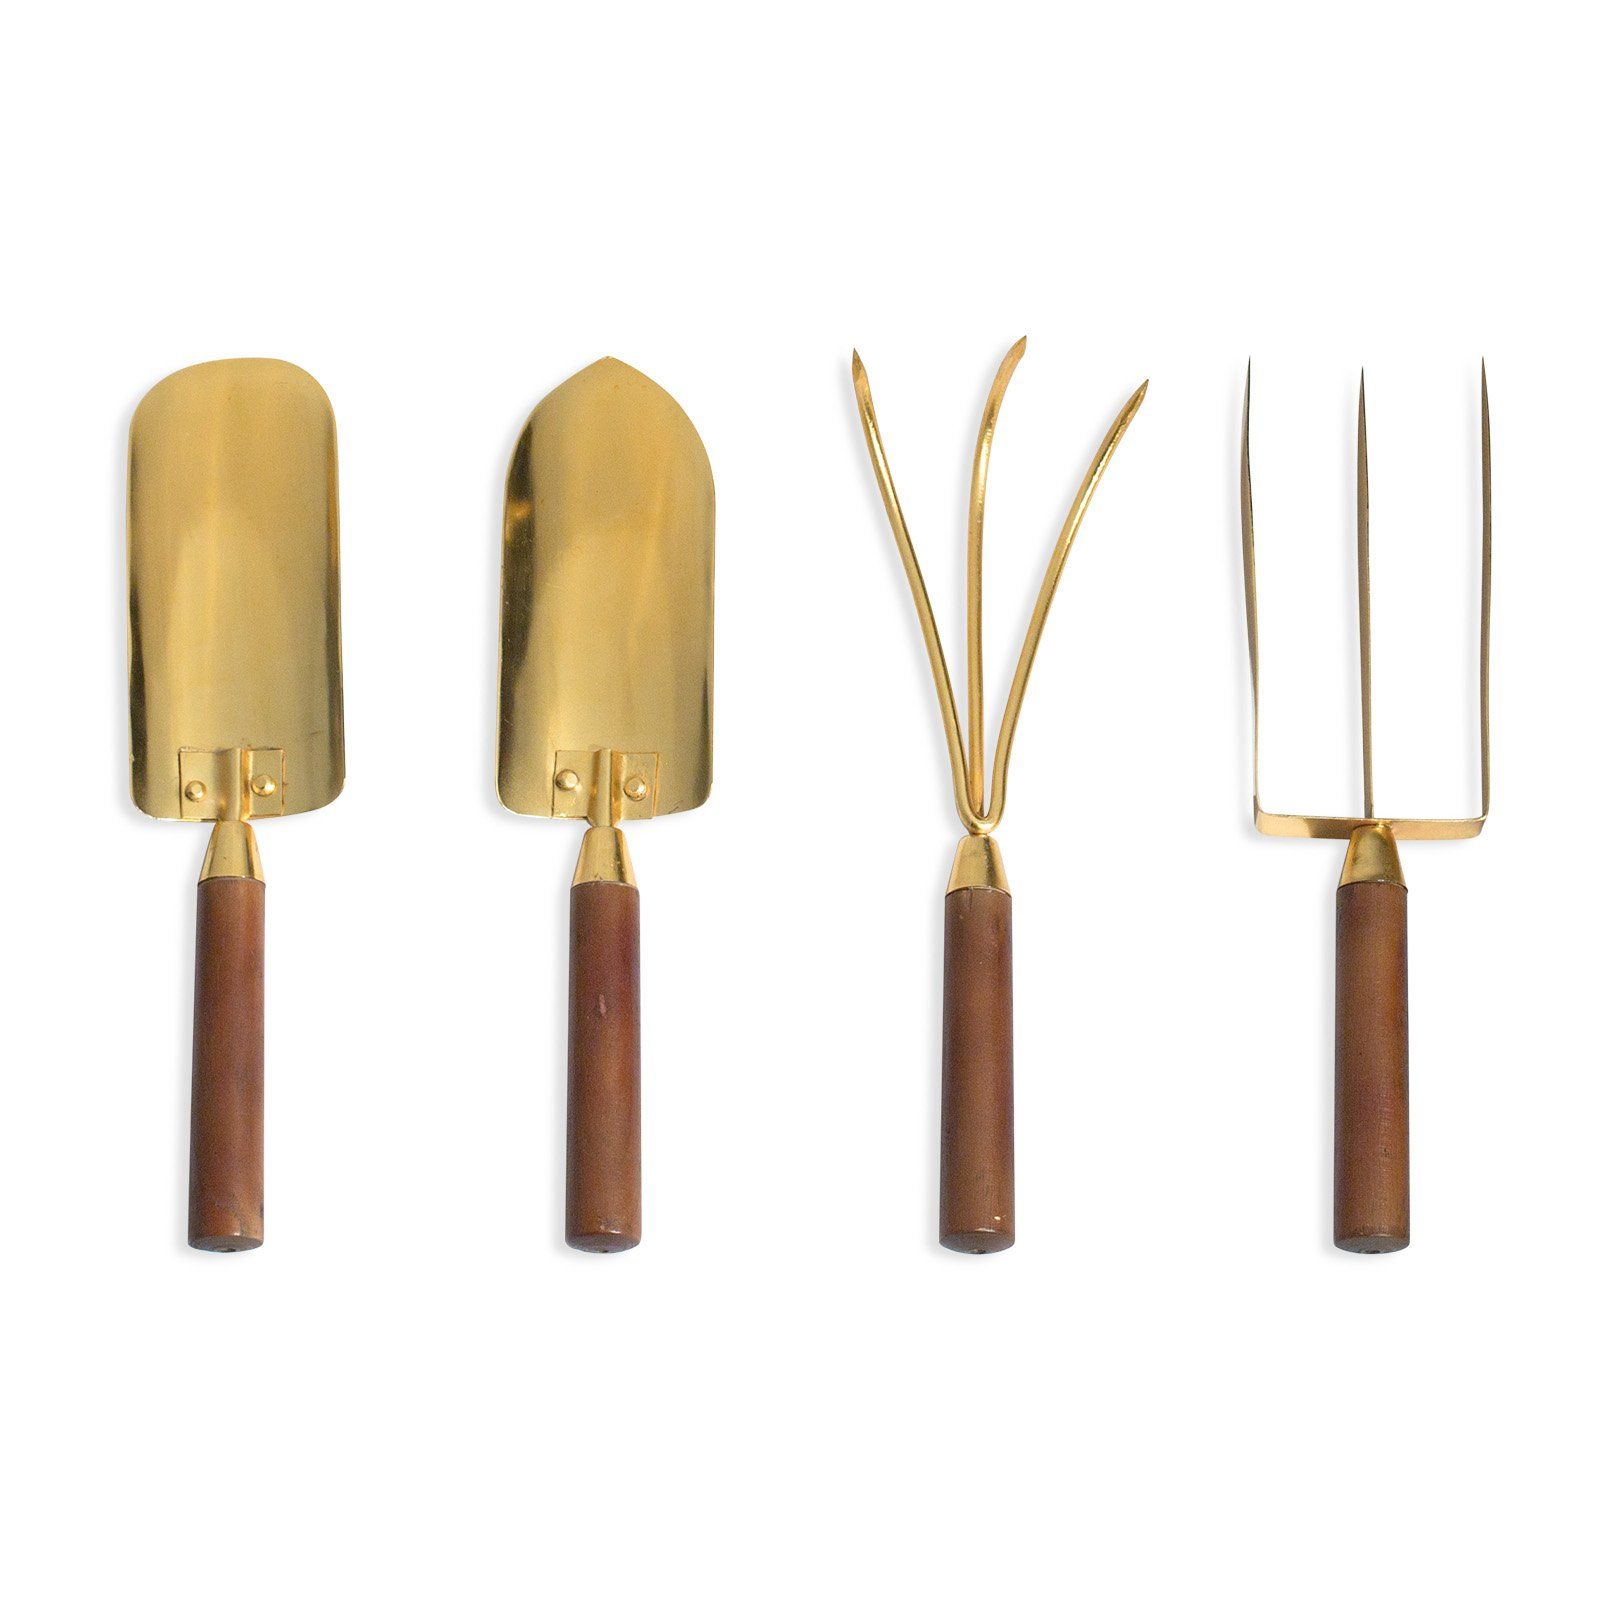 Belham Living Botanic Gold-Plated Garden Tools - Set of 4 with Wooden Box | Walmart (US)